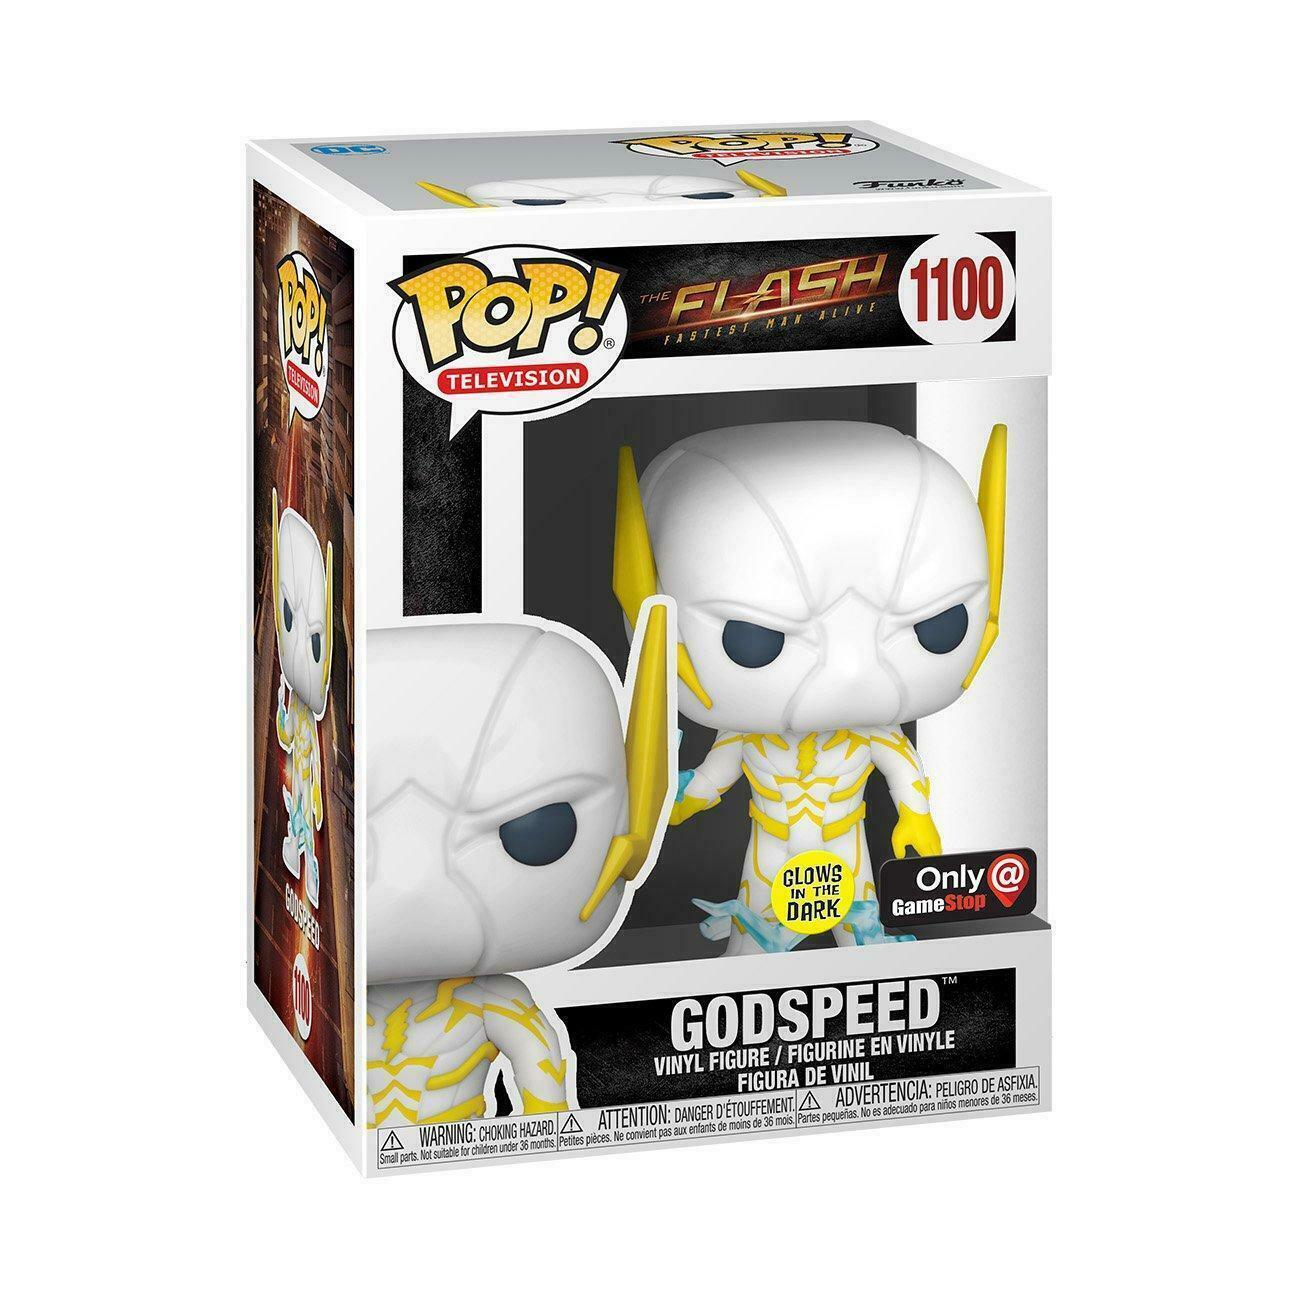 Godspeed (Glow in the Dark) #1100 Funko Pop! The Flash, GameStop Exclusive